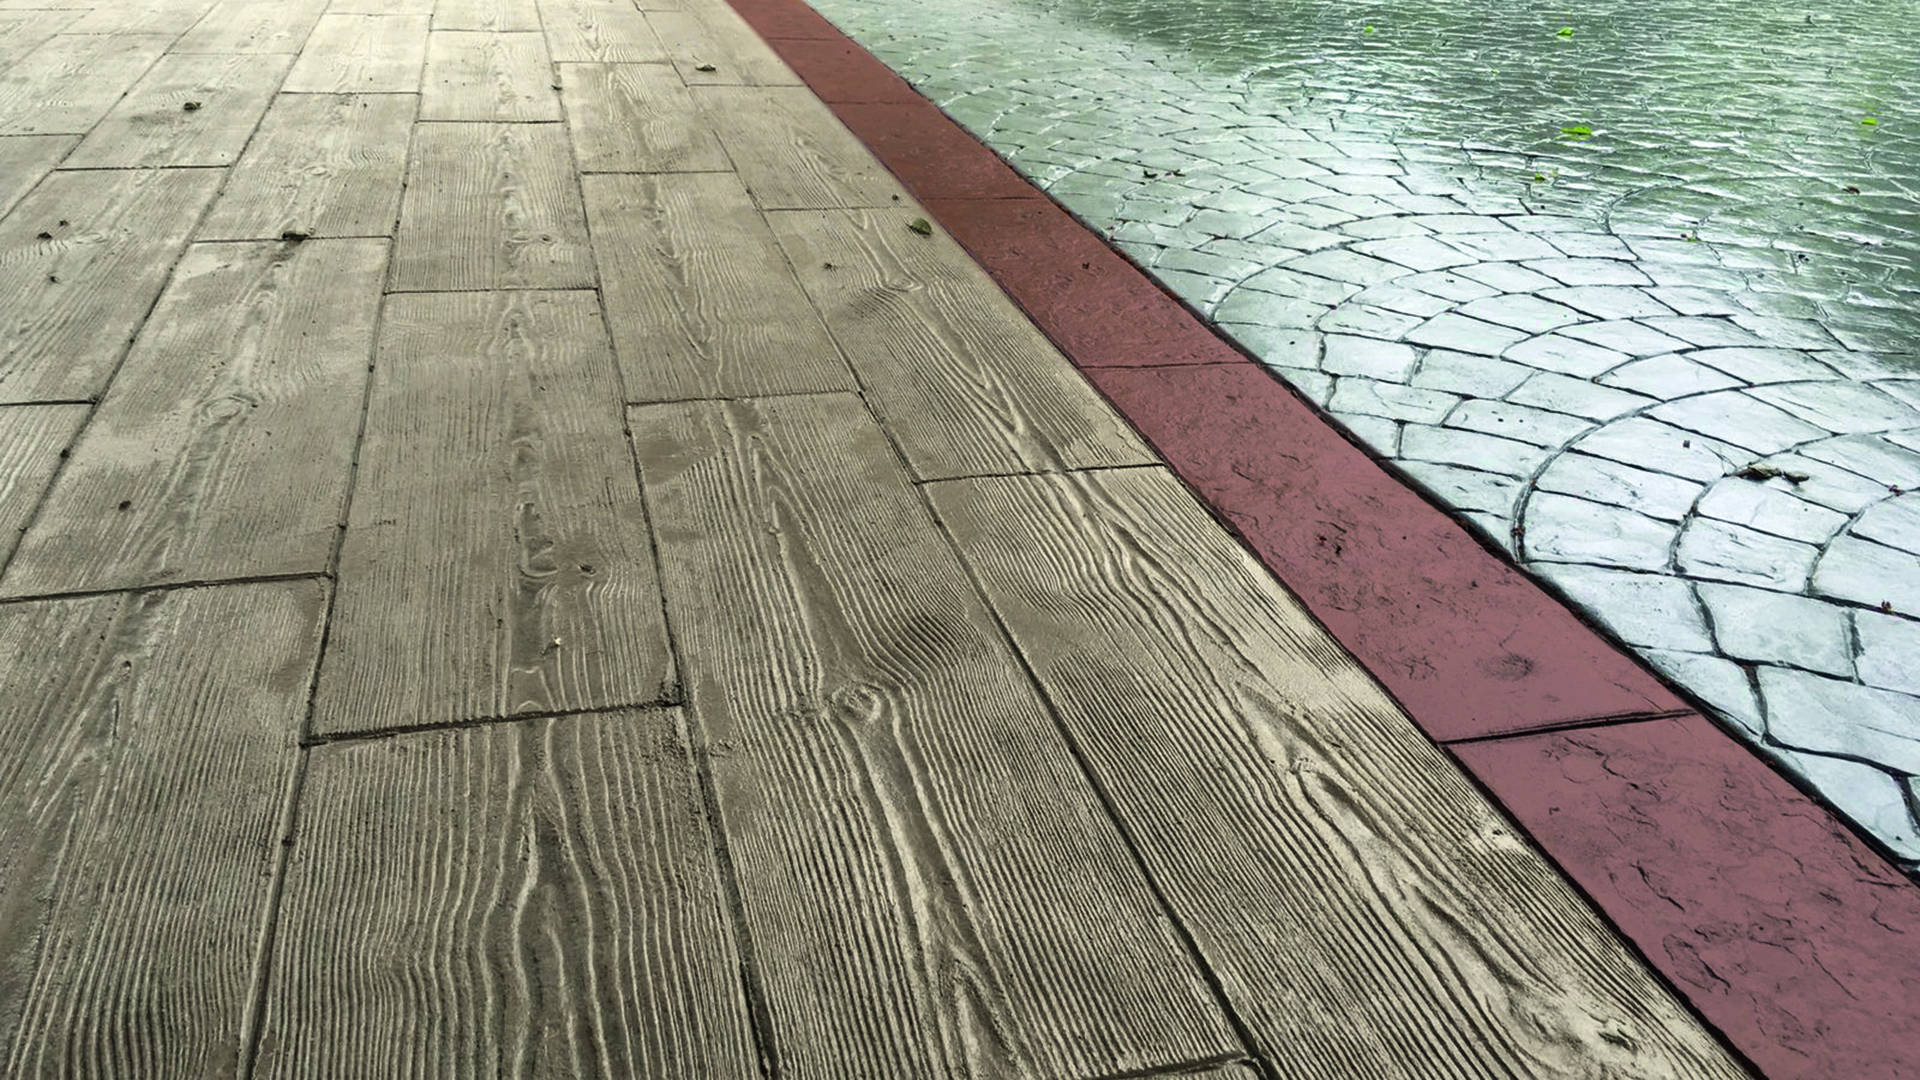   parque con pavimento de concreto estampado de madera